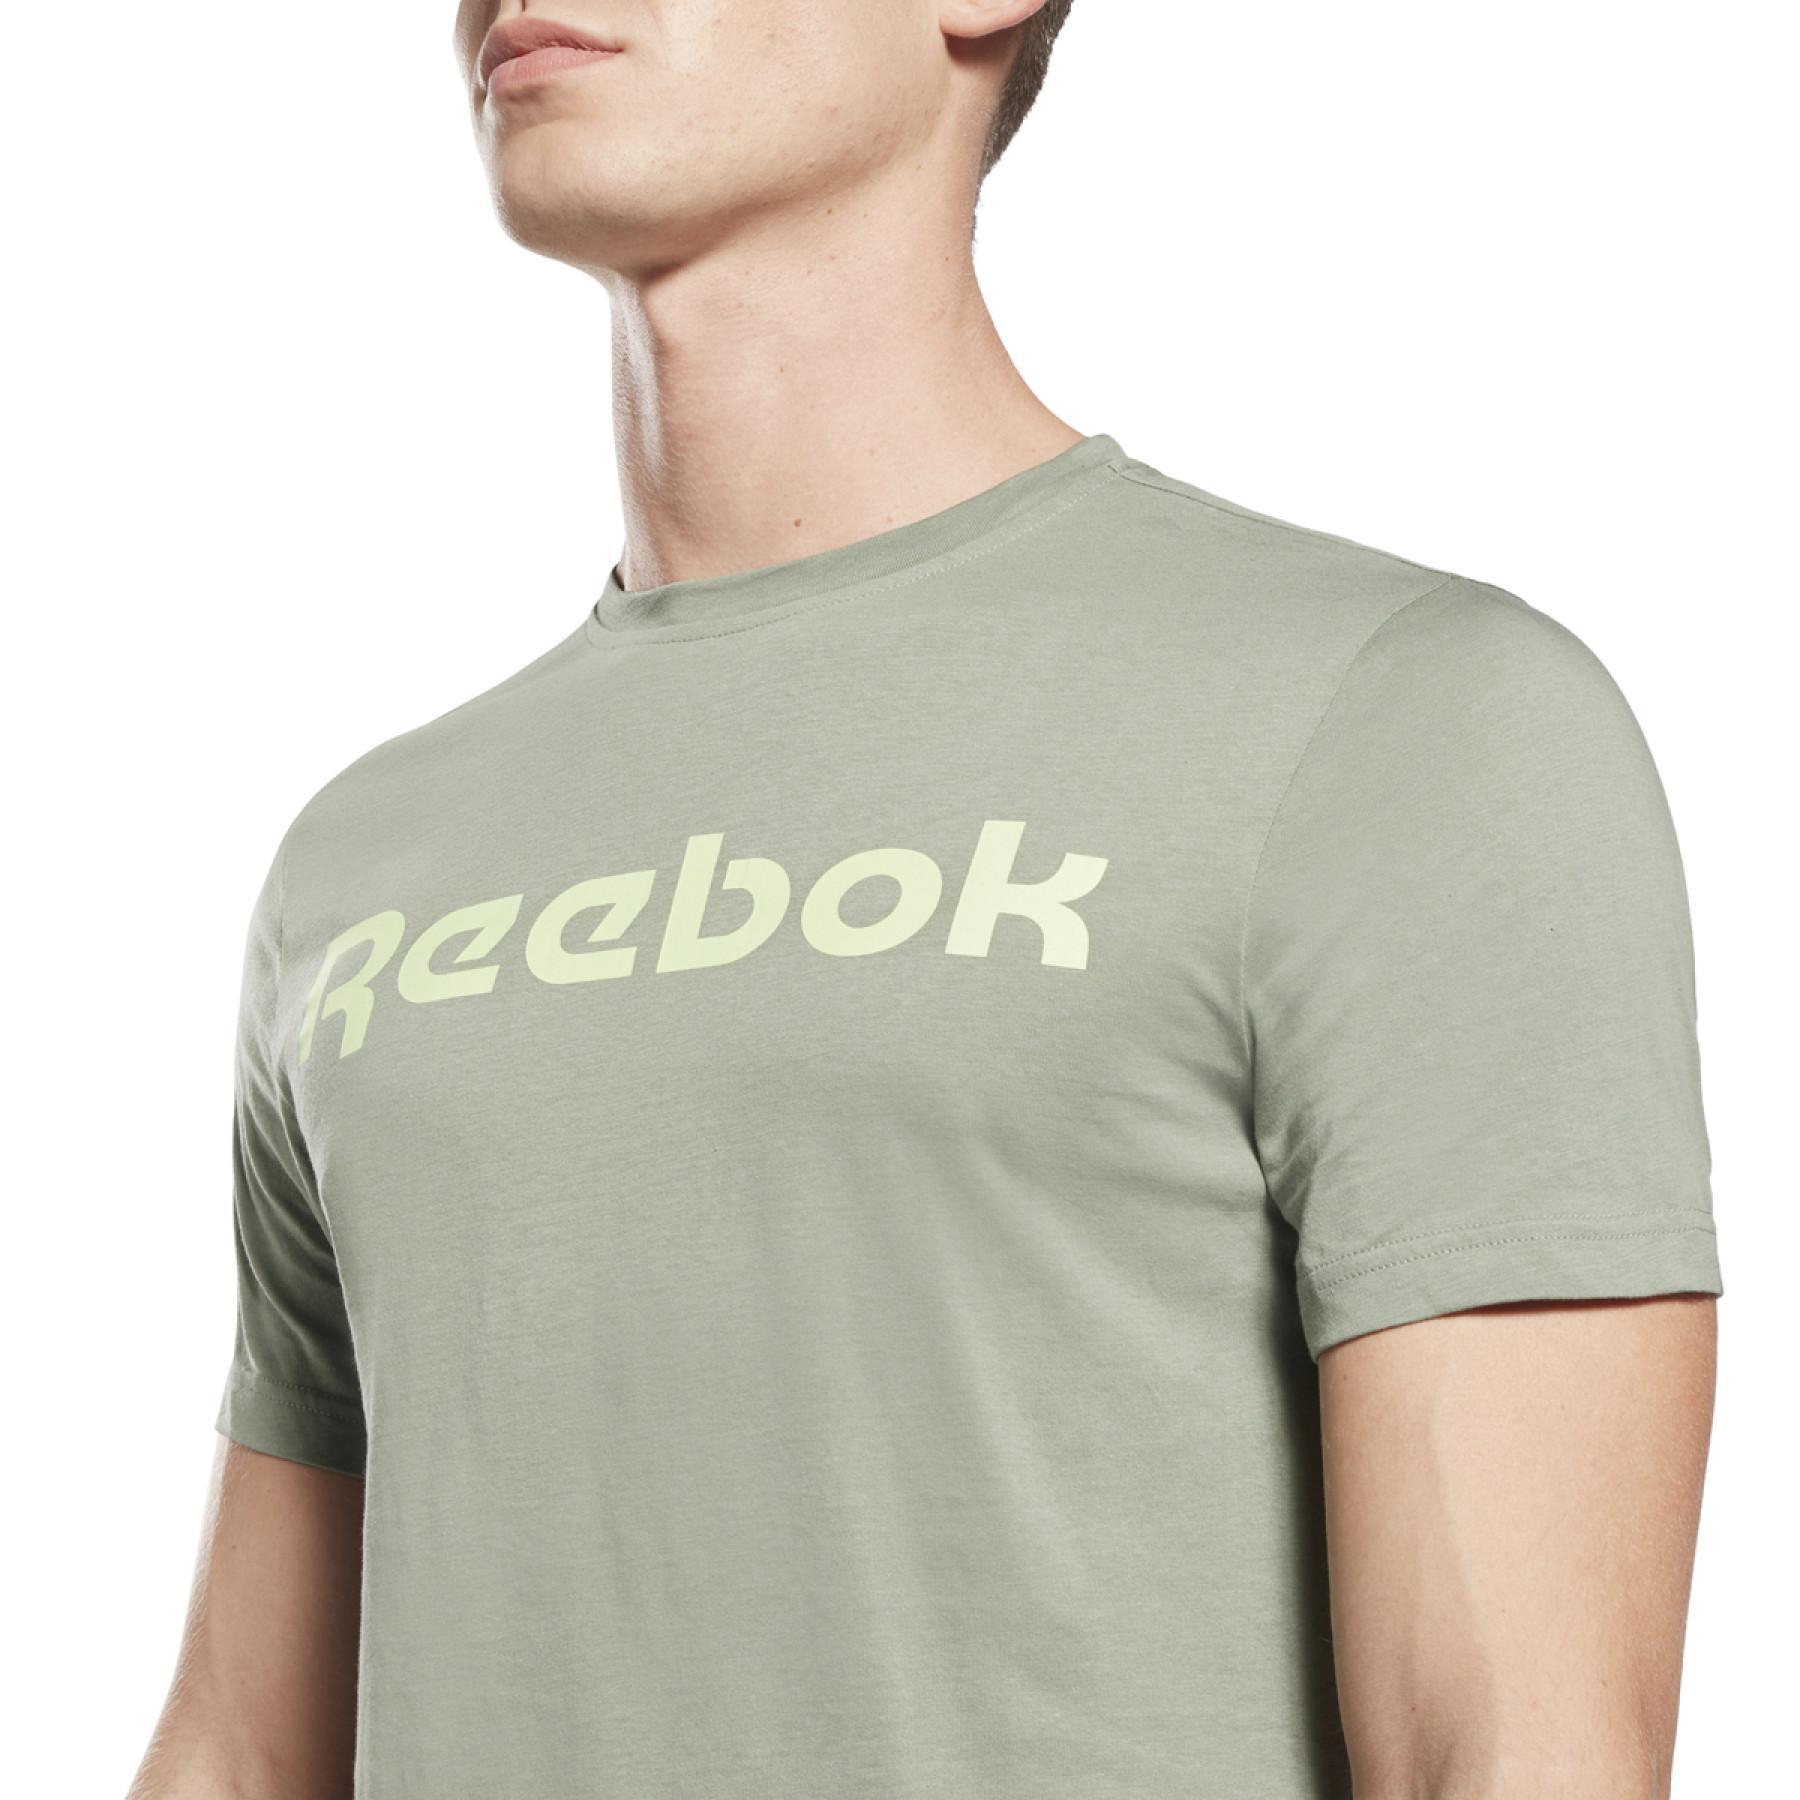 T-shirt Reebok Graphic Series Linear Logo